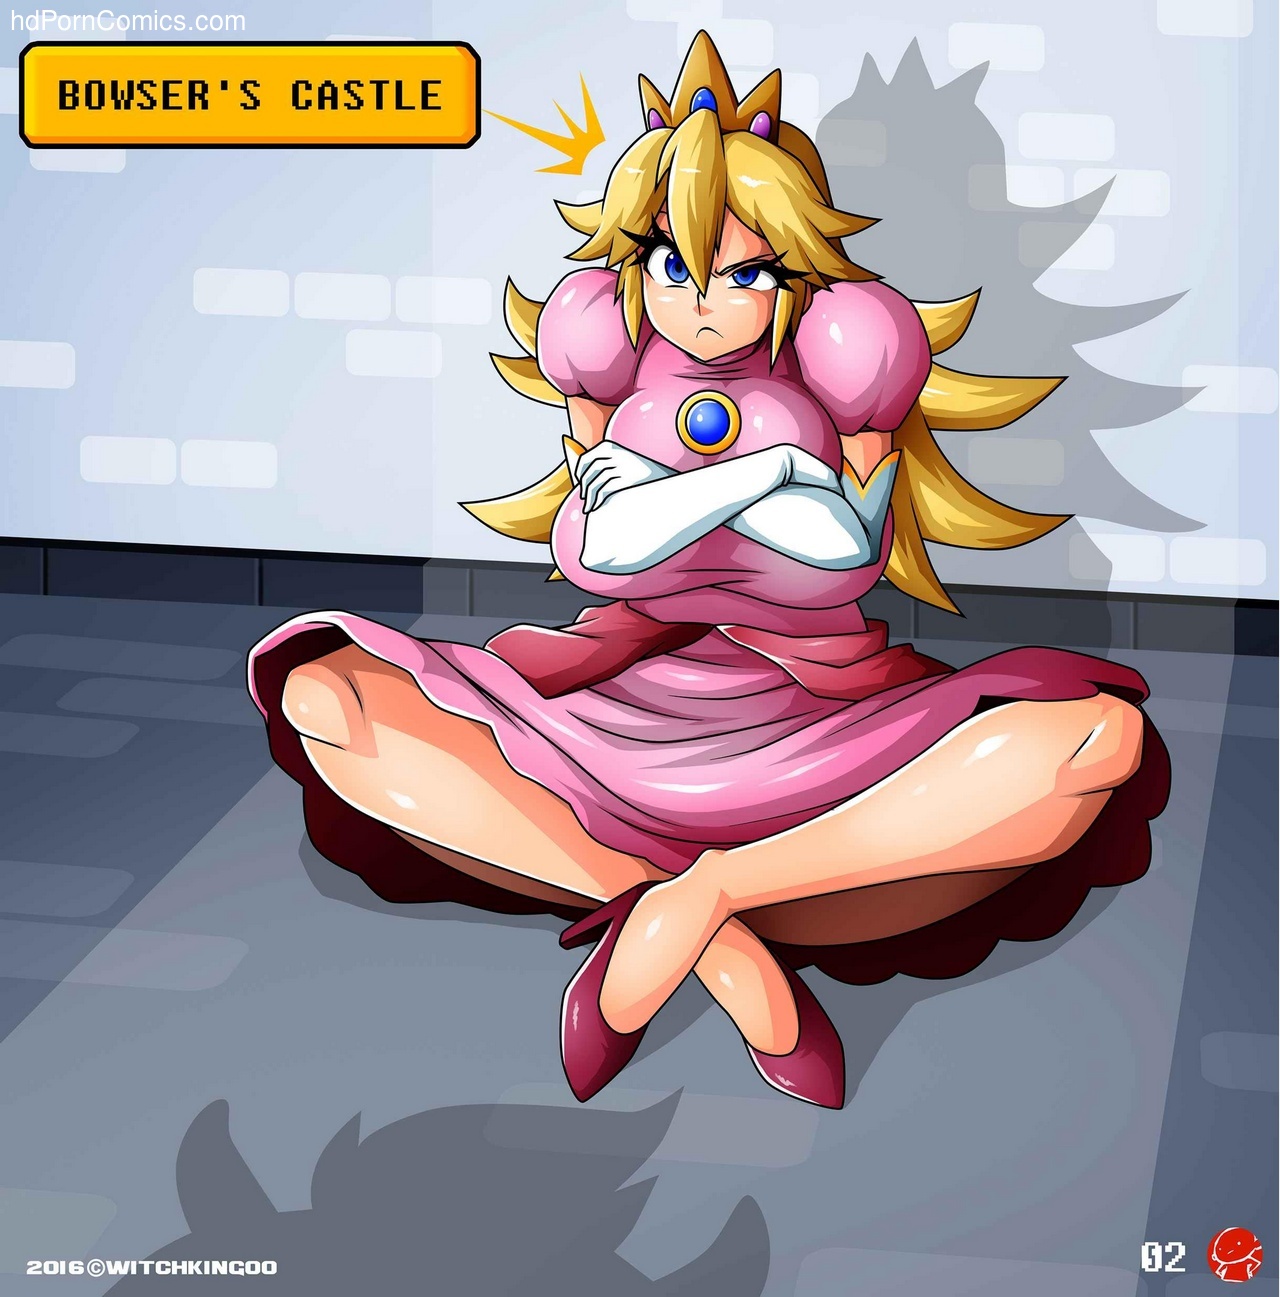 Extreme Cartoon Porn Mario - Princess Peach - Help Me Mario! Sex Comic - HD Porn Comics